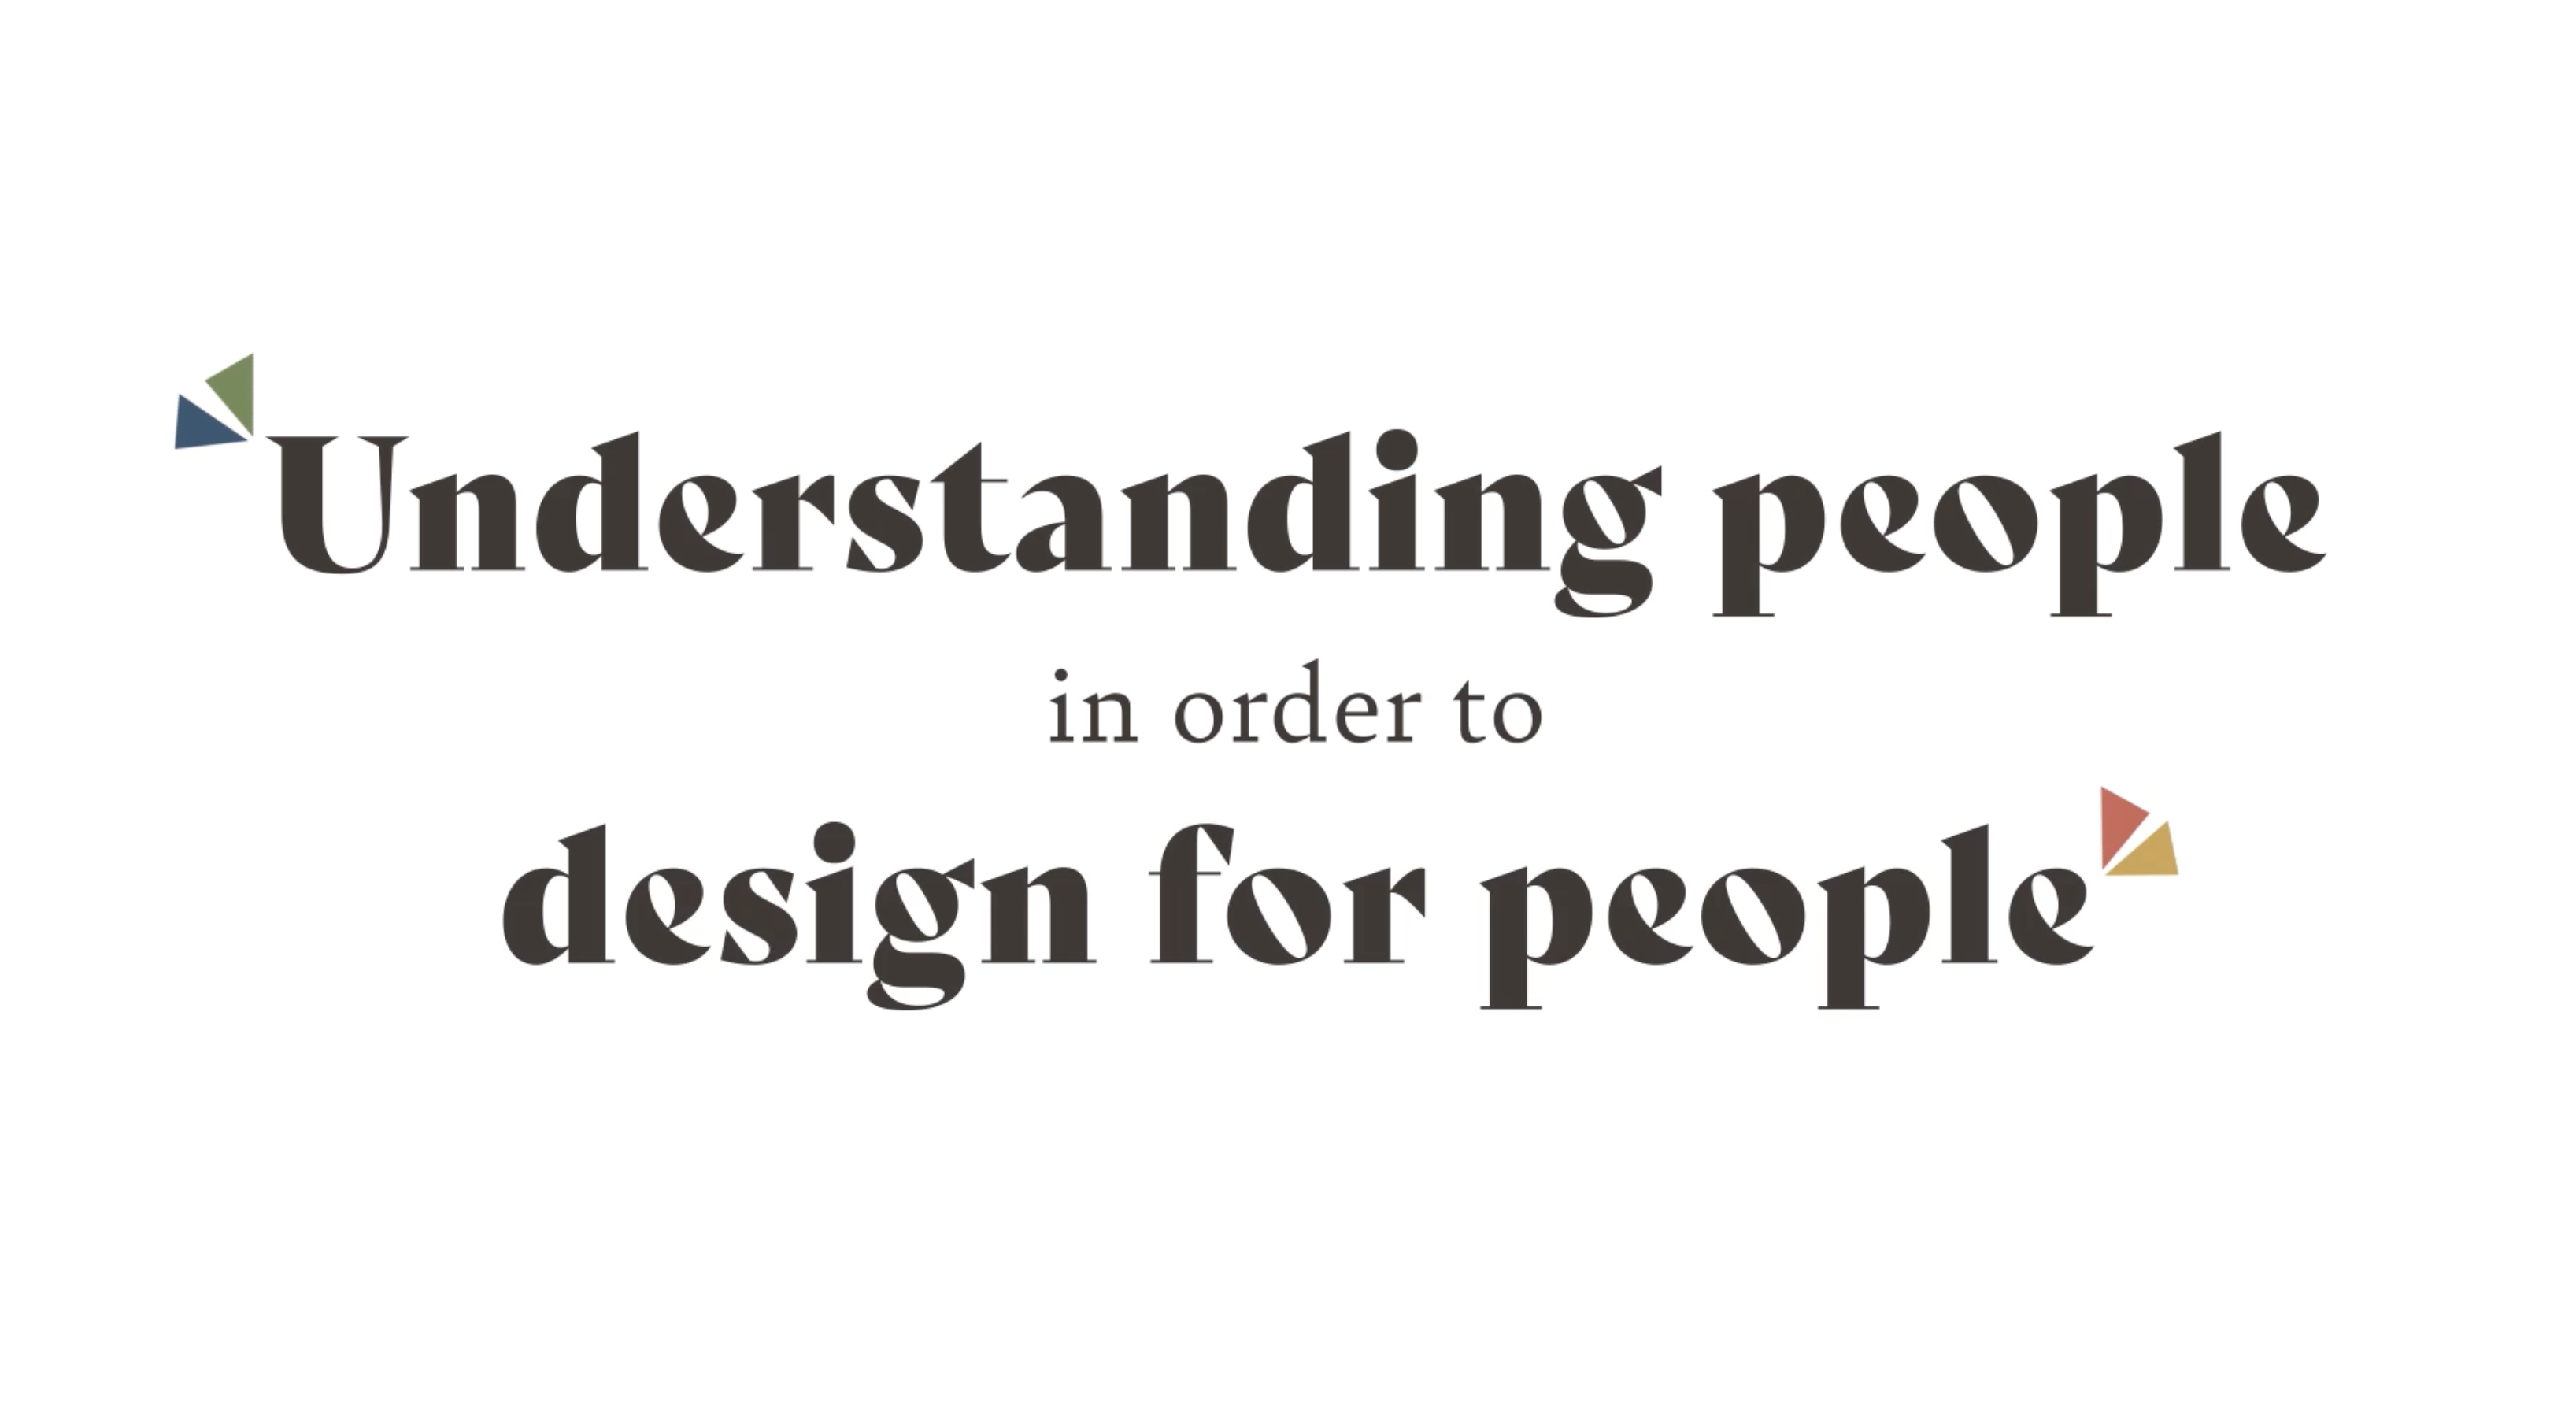 "Understanding People in order to design for people"